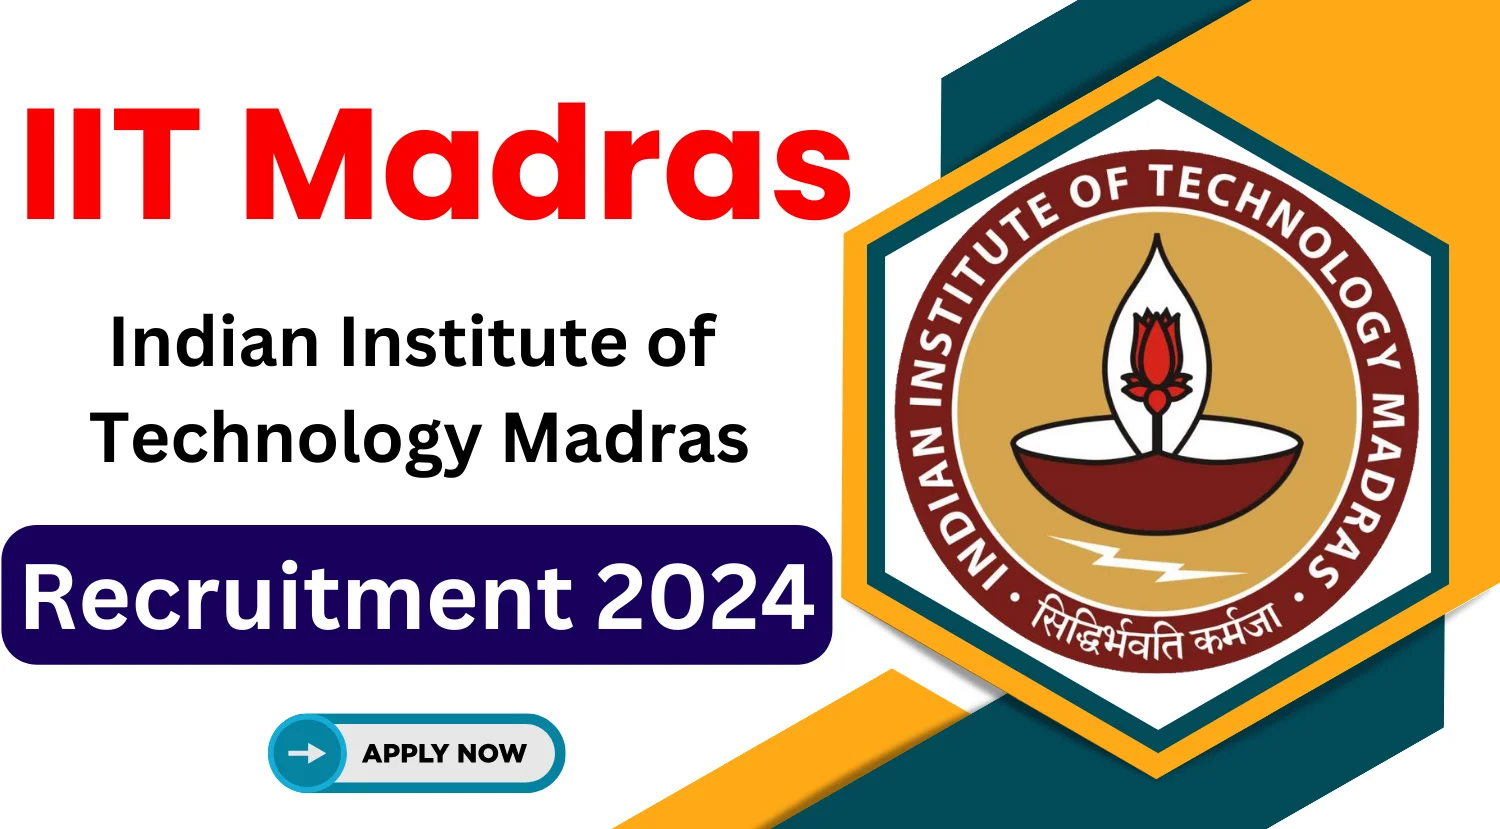 IIT Madras Recruitment 2024 for Faculty Vacancies